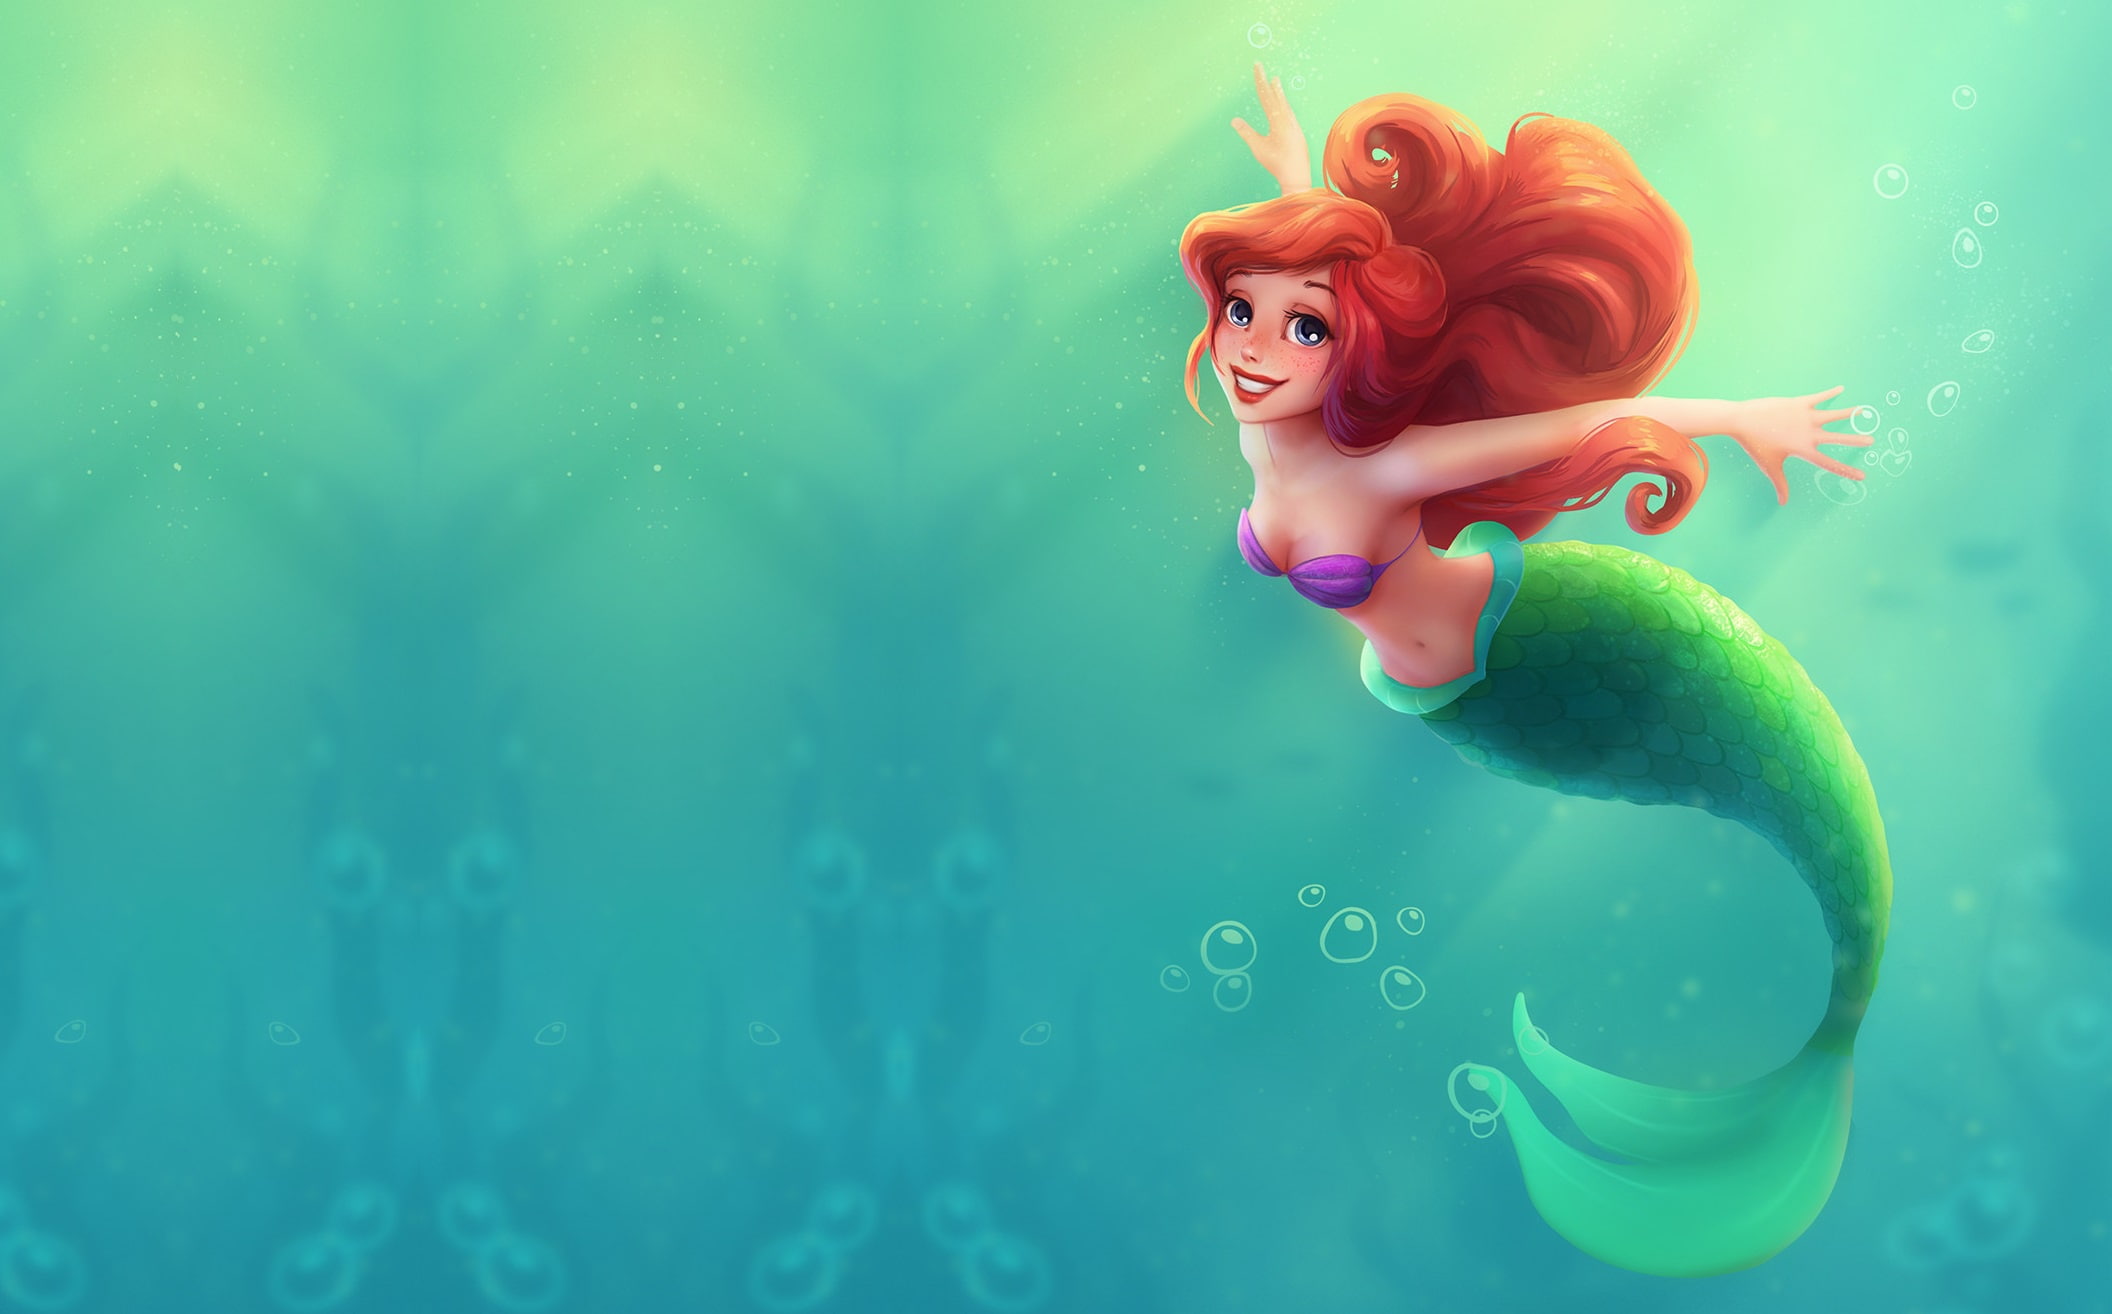 The Little Mermaid, Ariel (The Little Mermaid), Blue Eyes, Red Hair